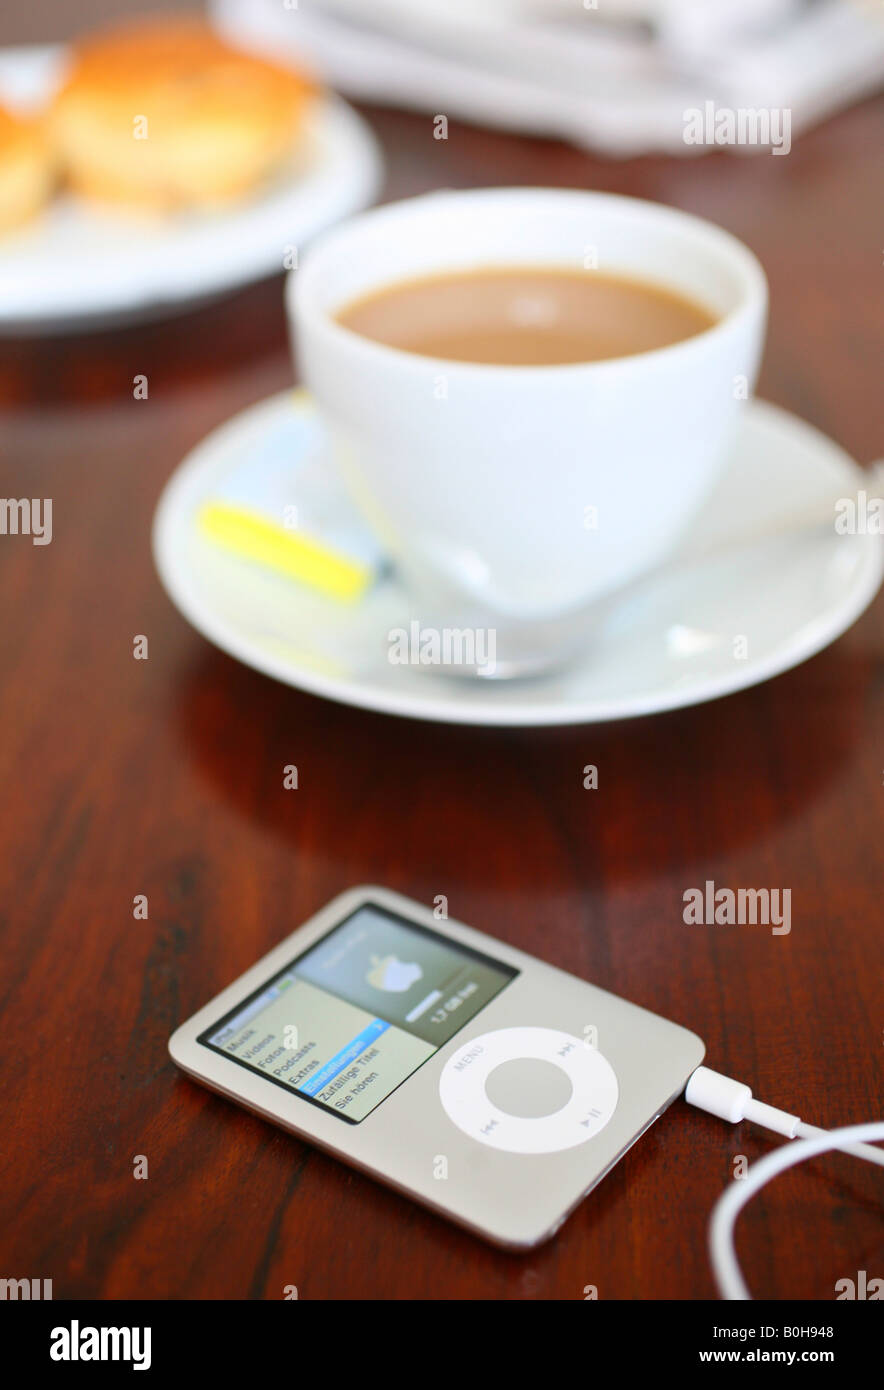 Apple iPod Nano laying on a coffee table Stock Photo